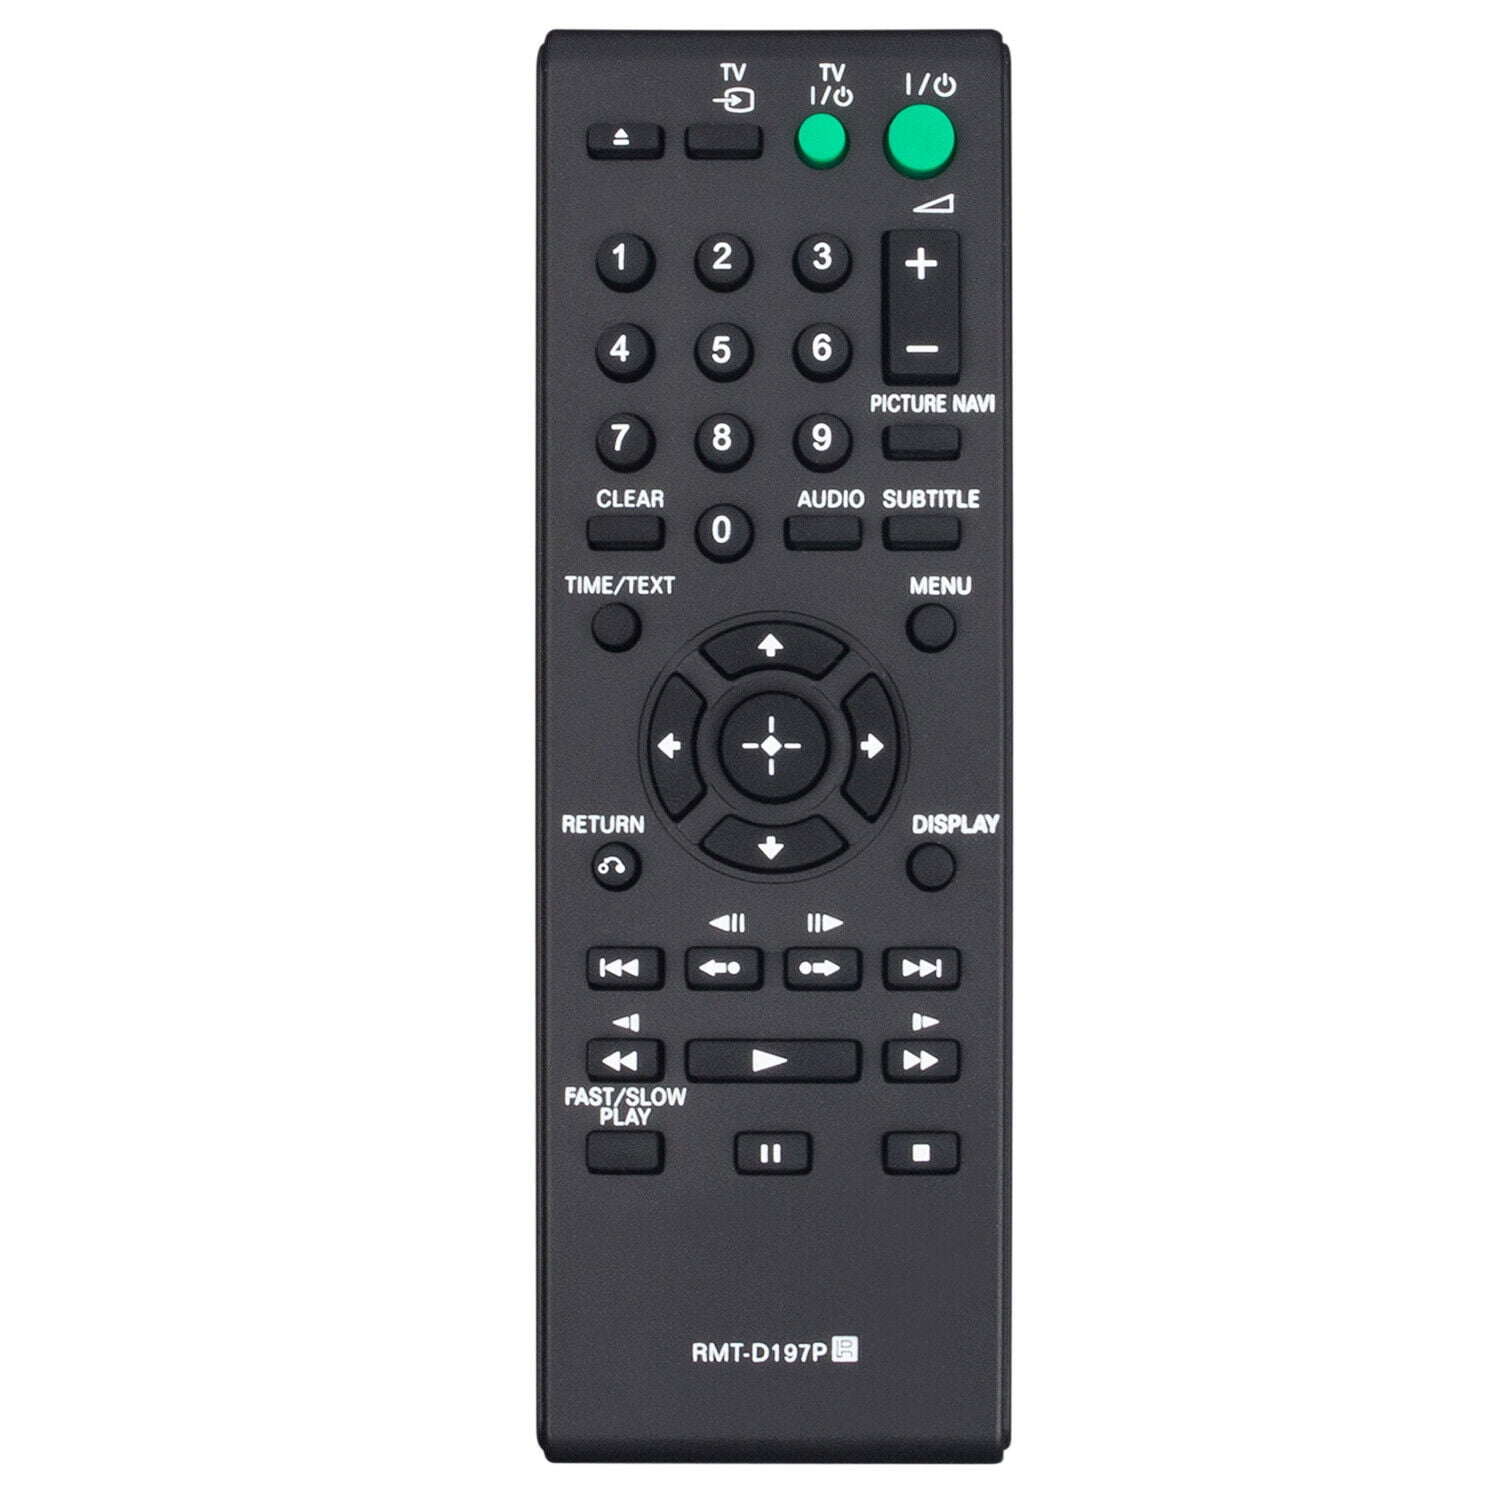 de ober beklimmen drempel Infared Remote Control RMT-D197P Replace for Sony DVD Player DVP-SR370 DVP-SR170  DVP-SR320 DVP-SR120 DVP-SR550K DVP-SR360 DVP-SR150 DVP-SR350 - Walmart.com